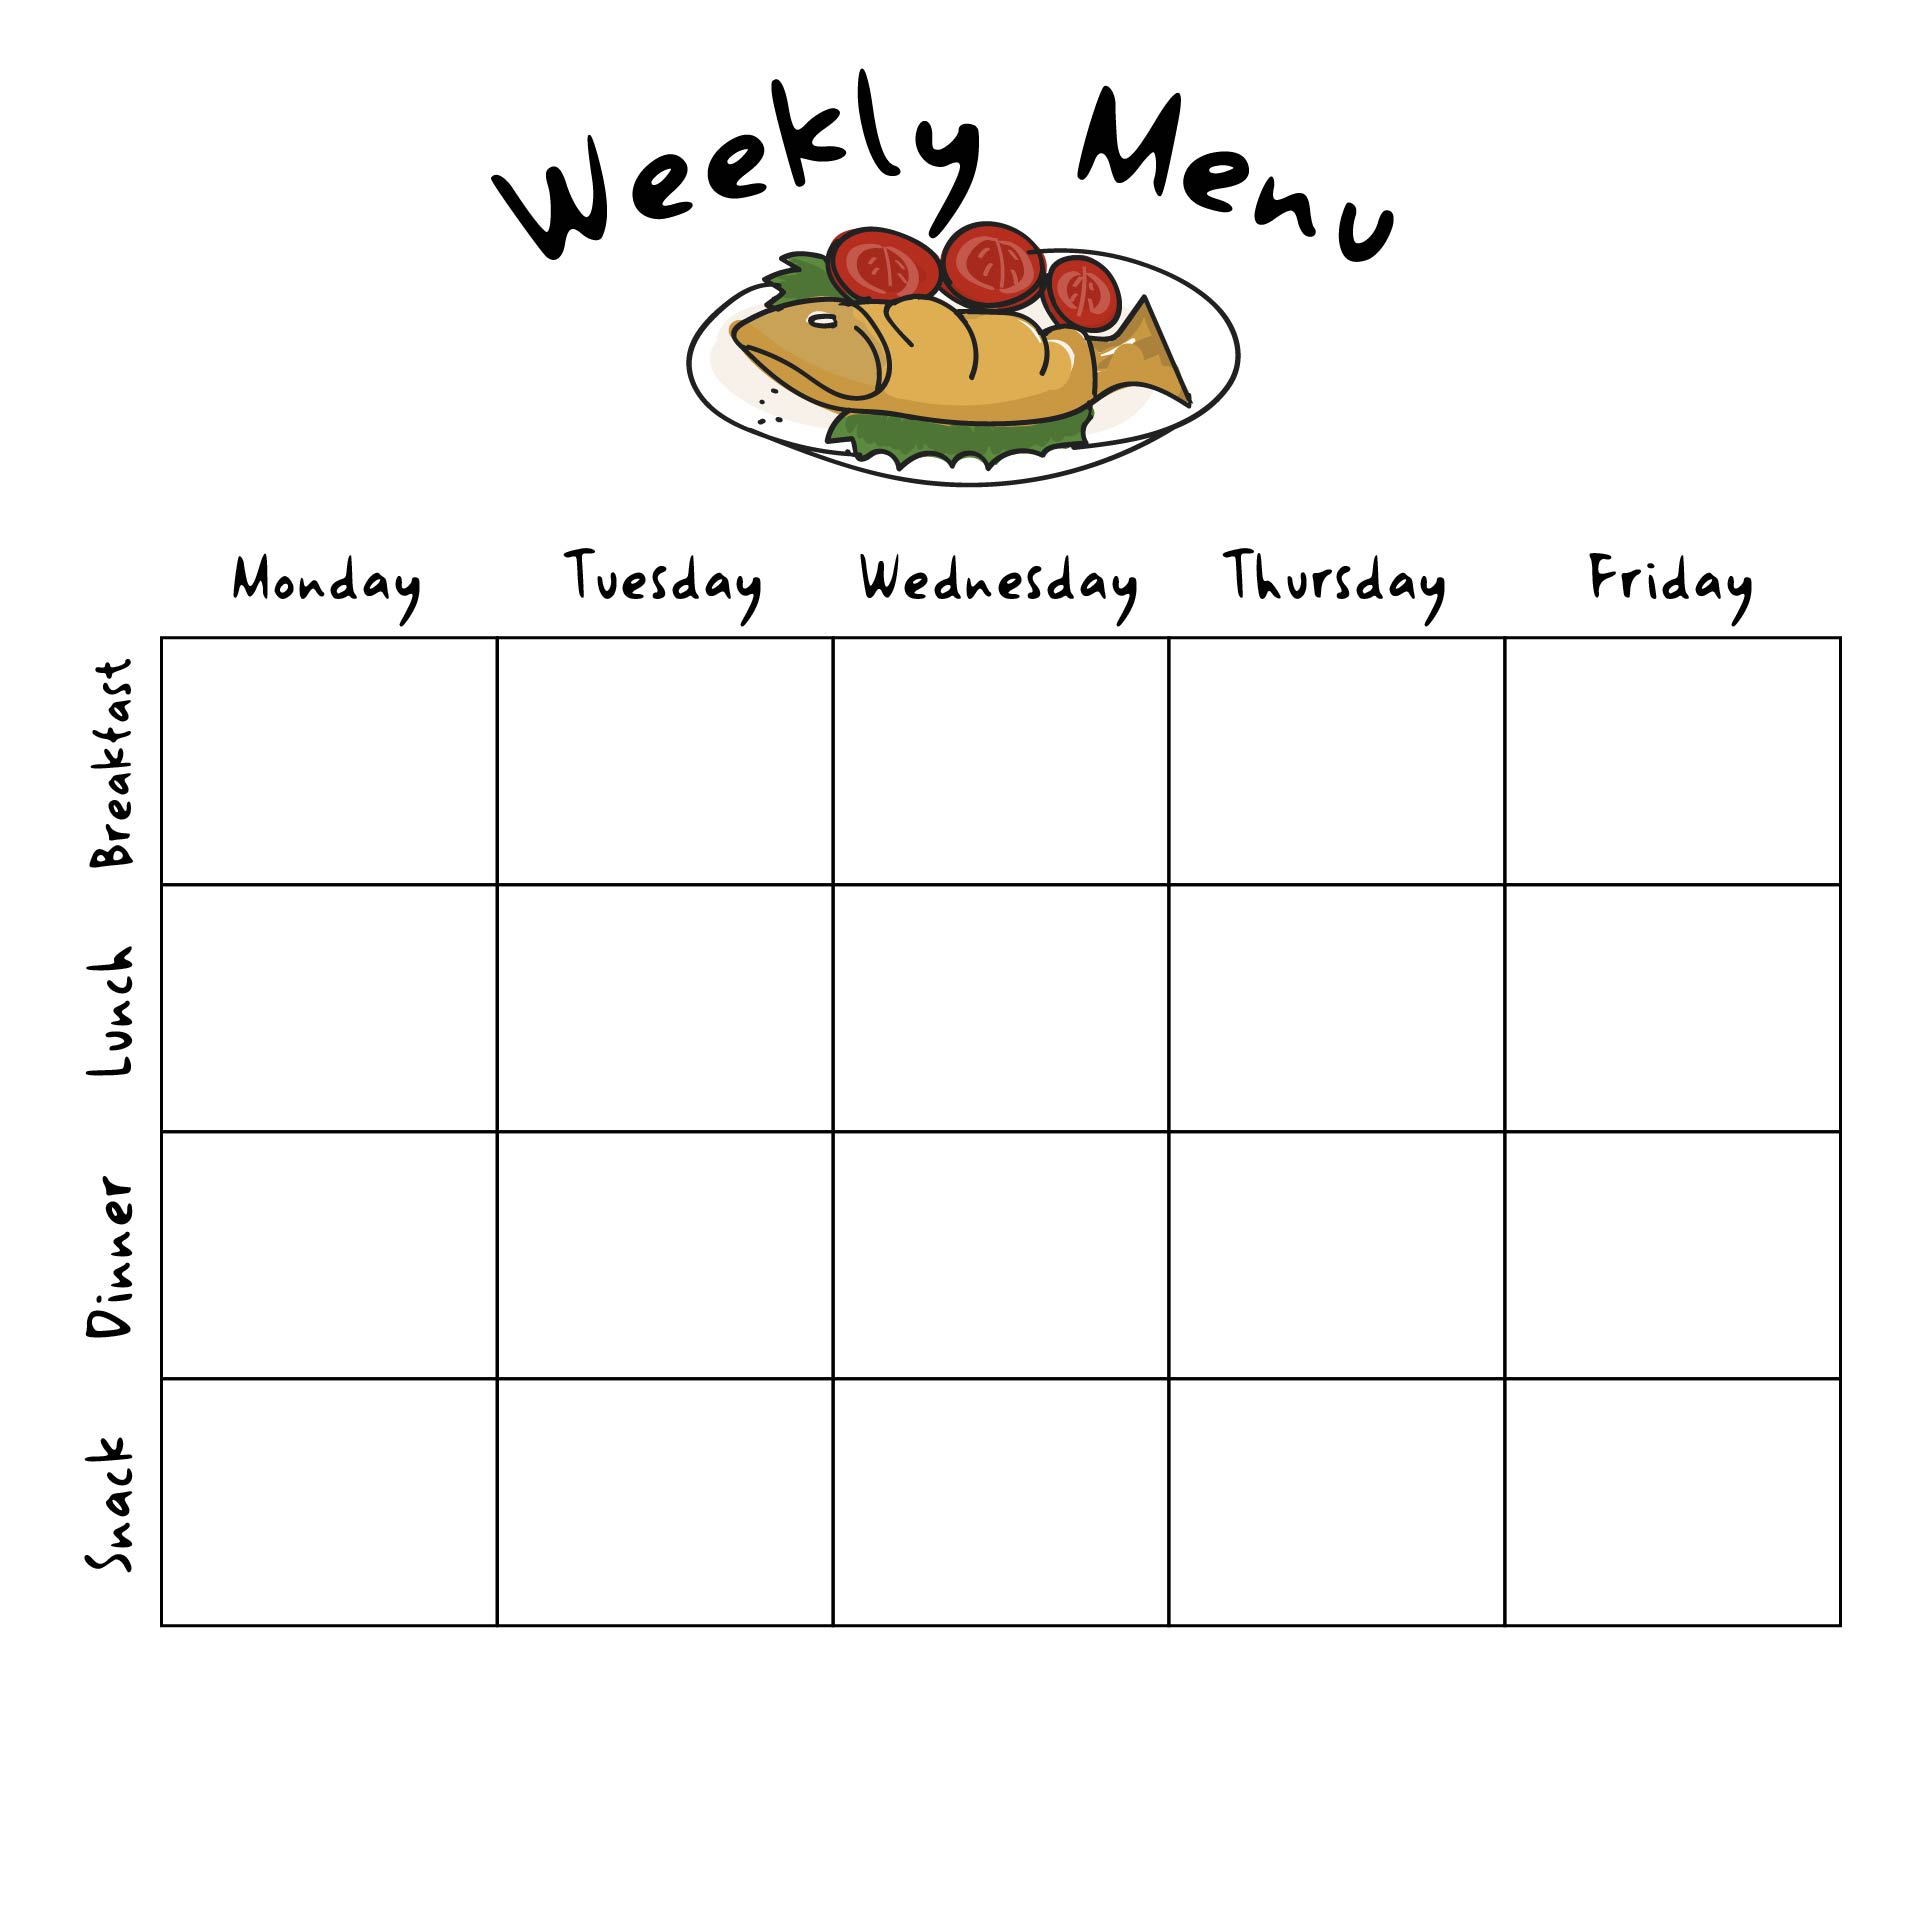 printable-weekly-menu-template-for-daycare-printable-templates